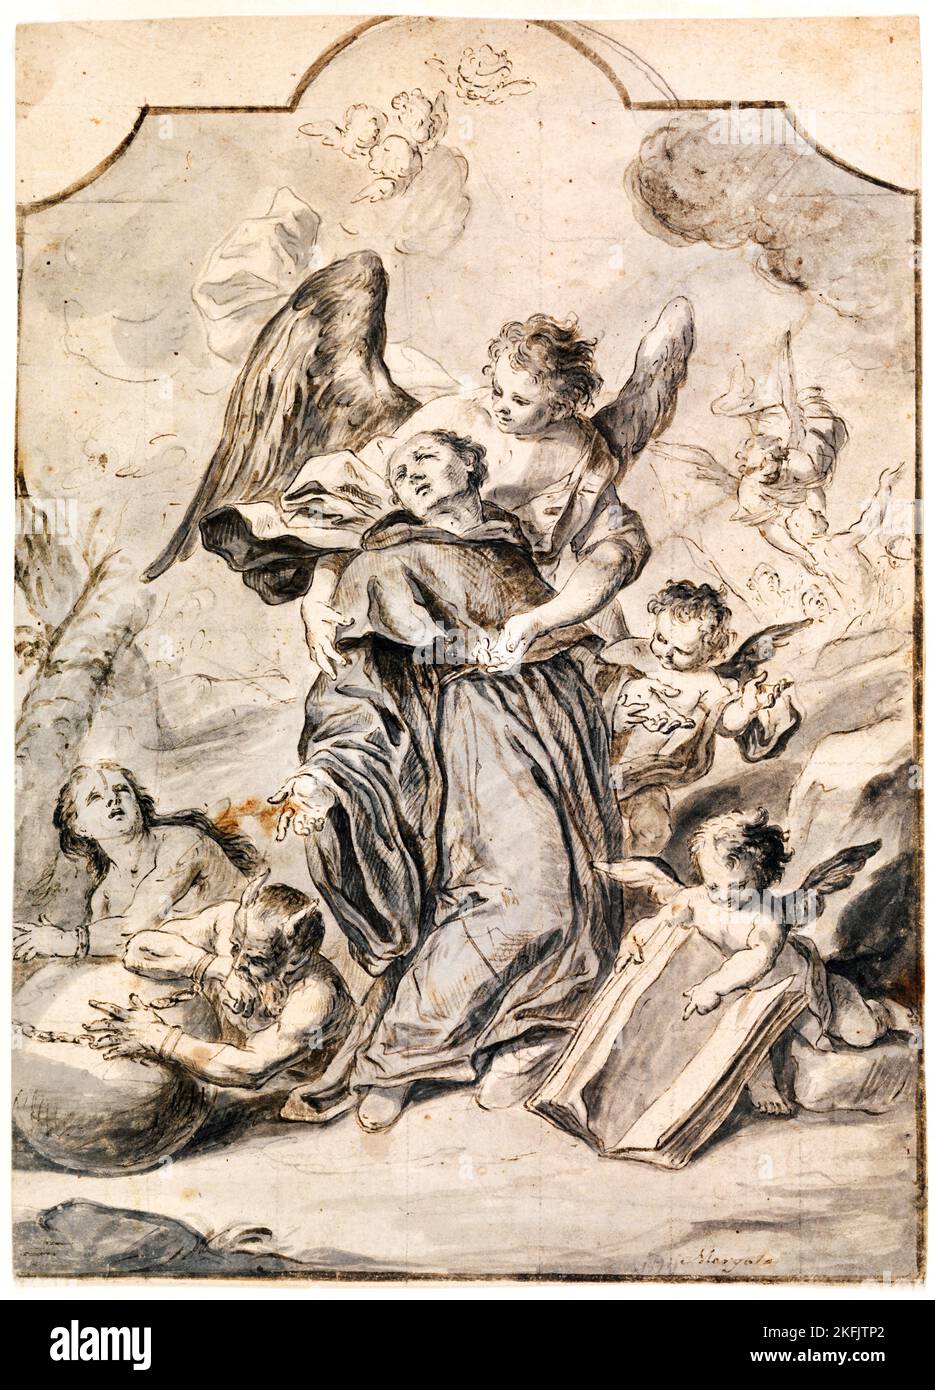 Francesco Saverio Mergolo; Vision of Sainted Benedictine Monk; 1776; Pen and brown ink on paper; Cooper Hewitt, Smithsonian Design Museum, New York Ci Stock Photo